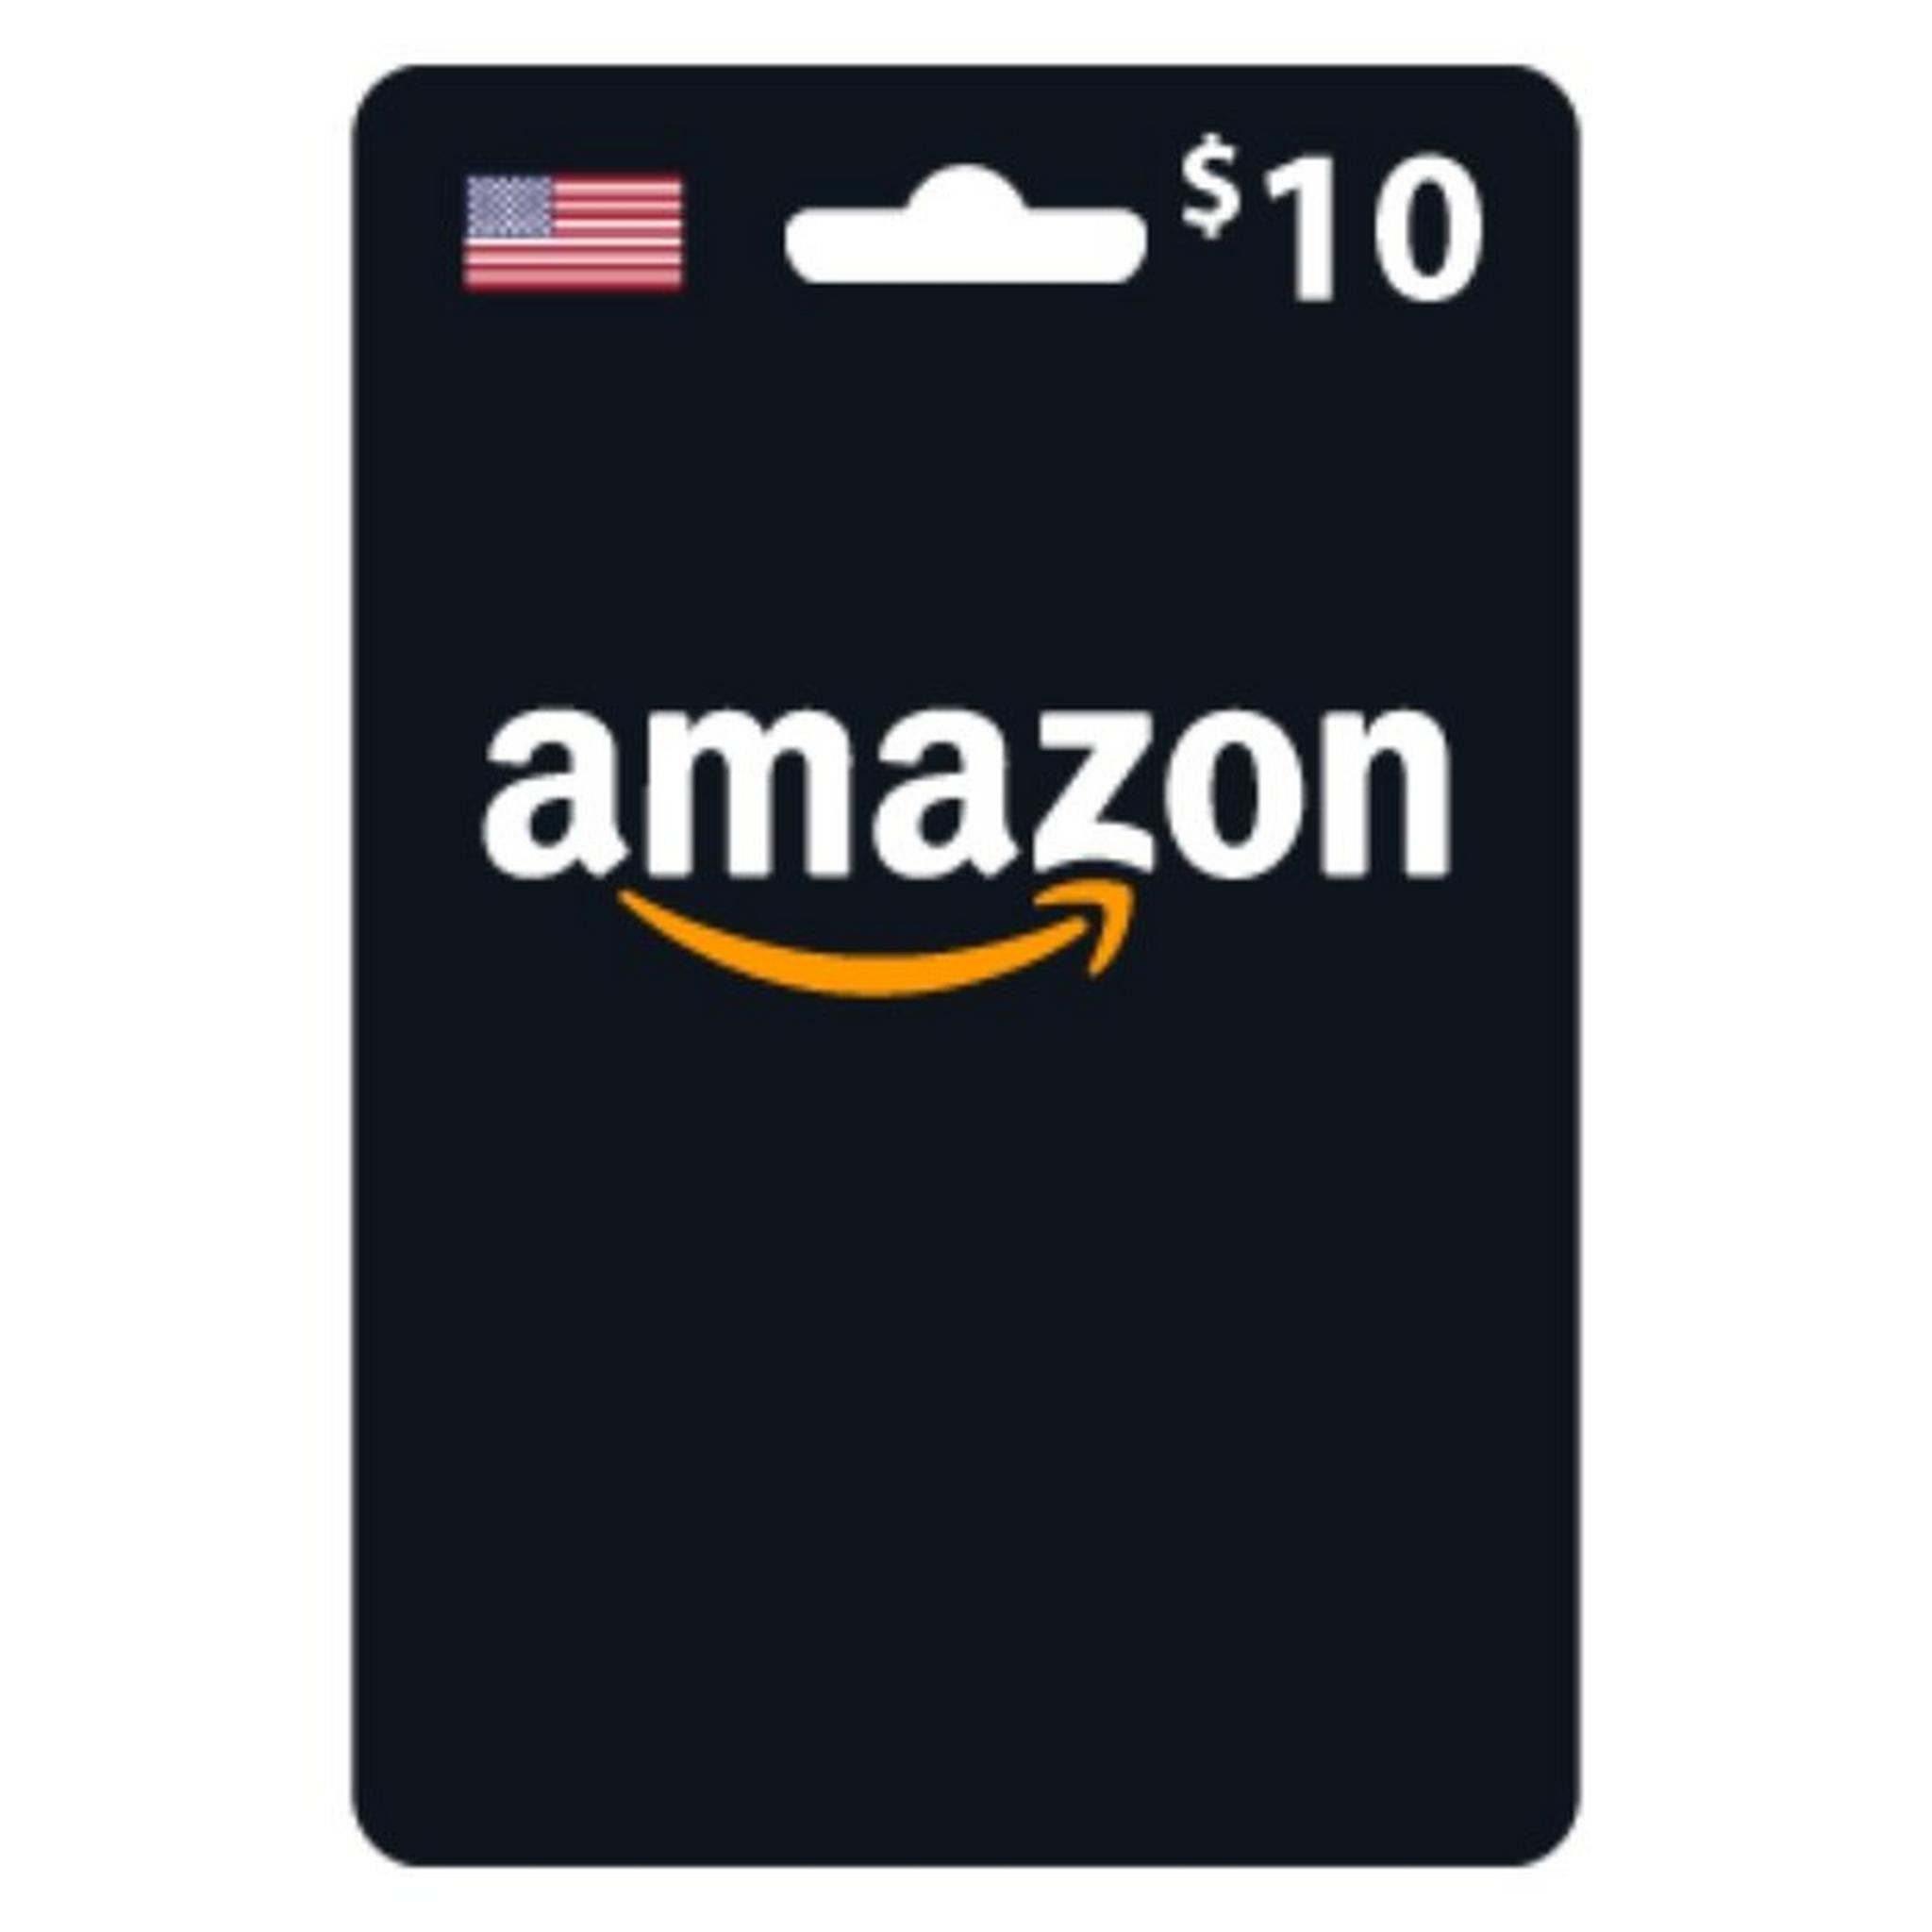 Amazon Gift Card $10 (U.S. Account)